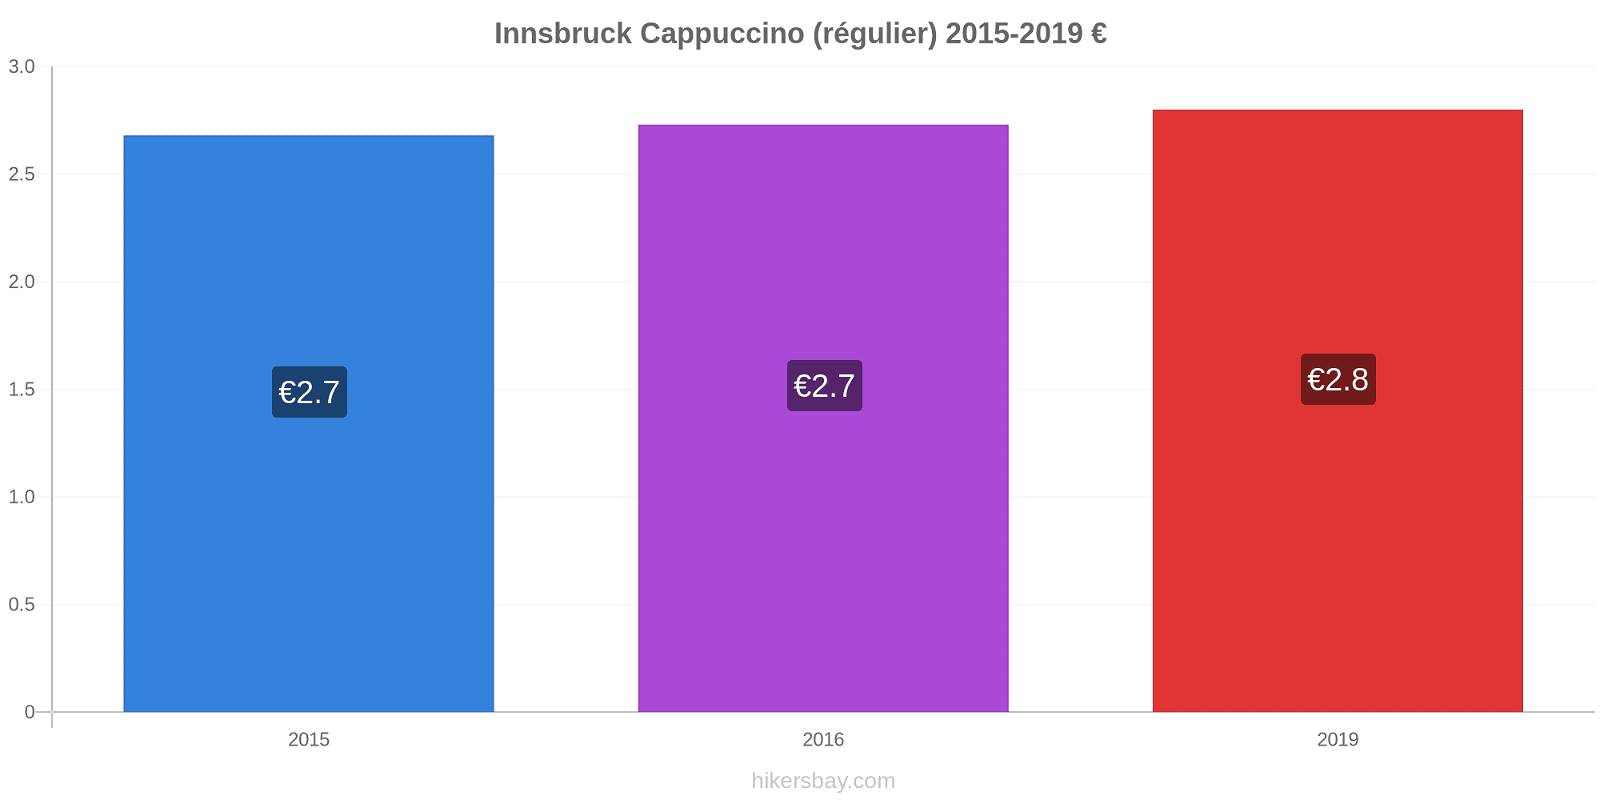 Innsbruck changements de prix Cappuccino (régulier) hikersbay.com